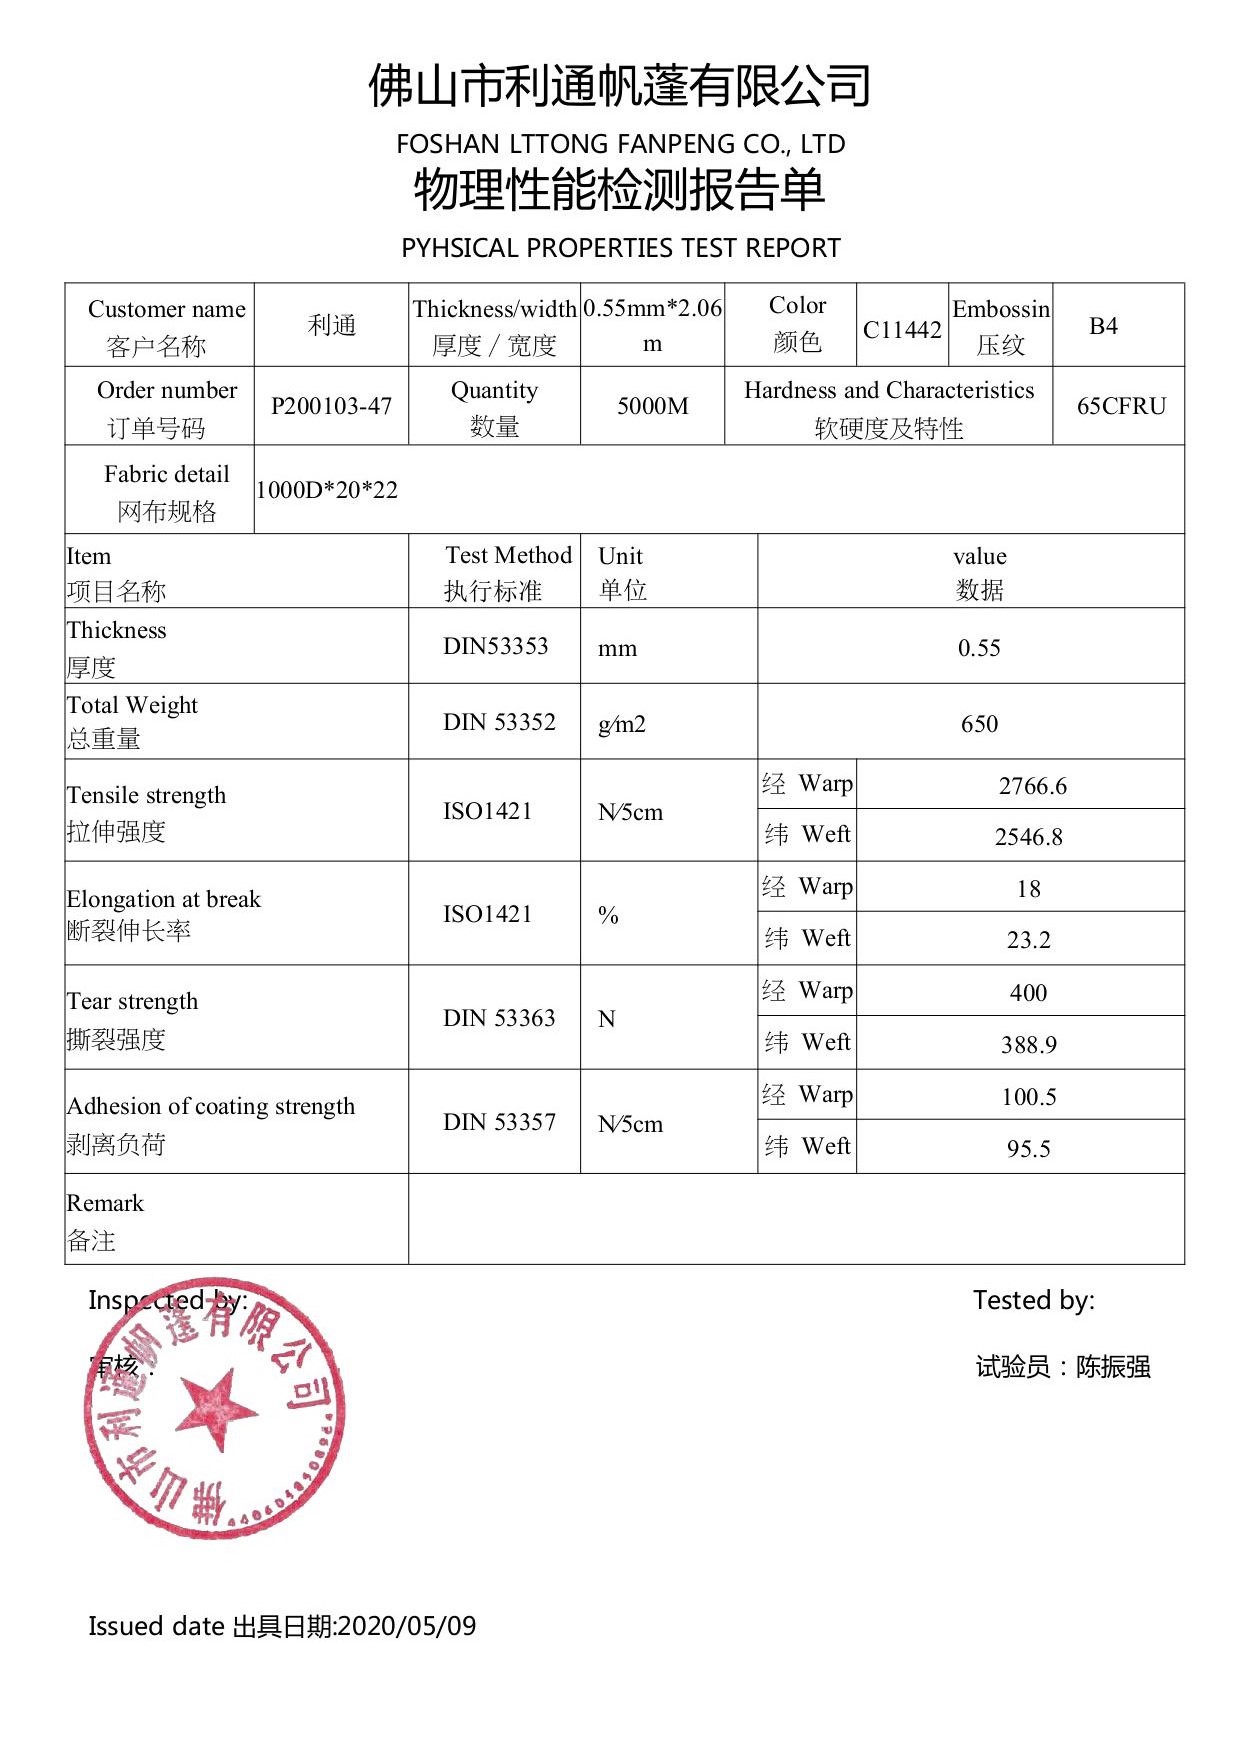 Data sheet for 0.55mm PVC coated tarpaulin